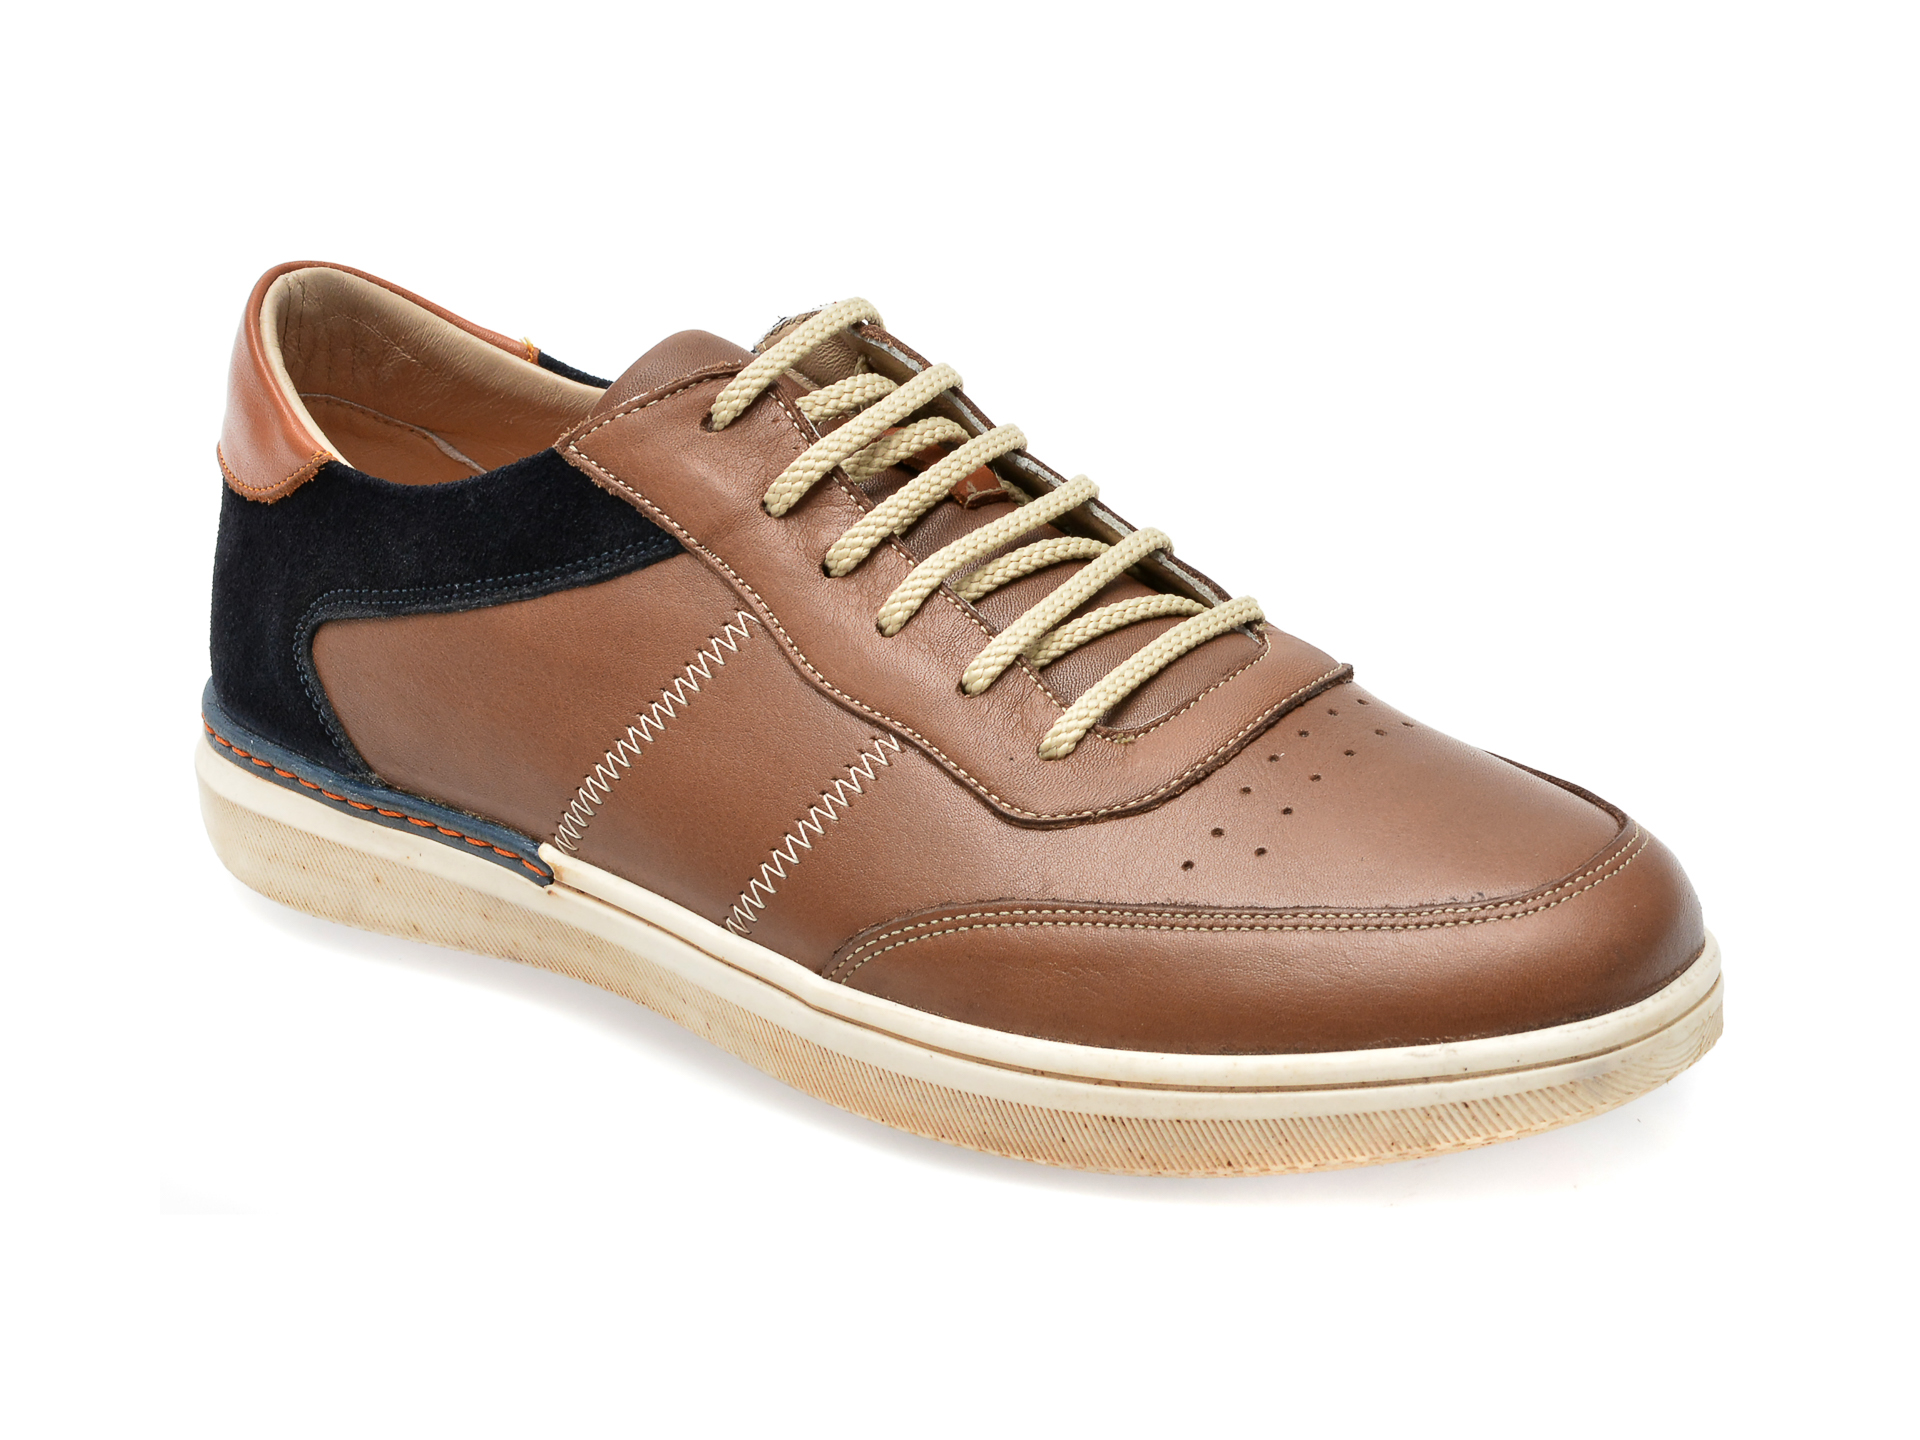 Pantofi OTTER maro, 3421, din piele naturala /barbati/pantofi